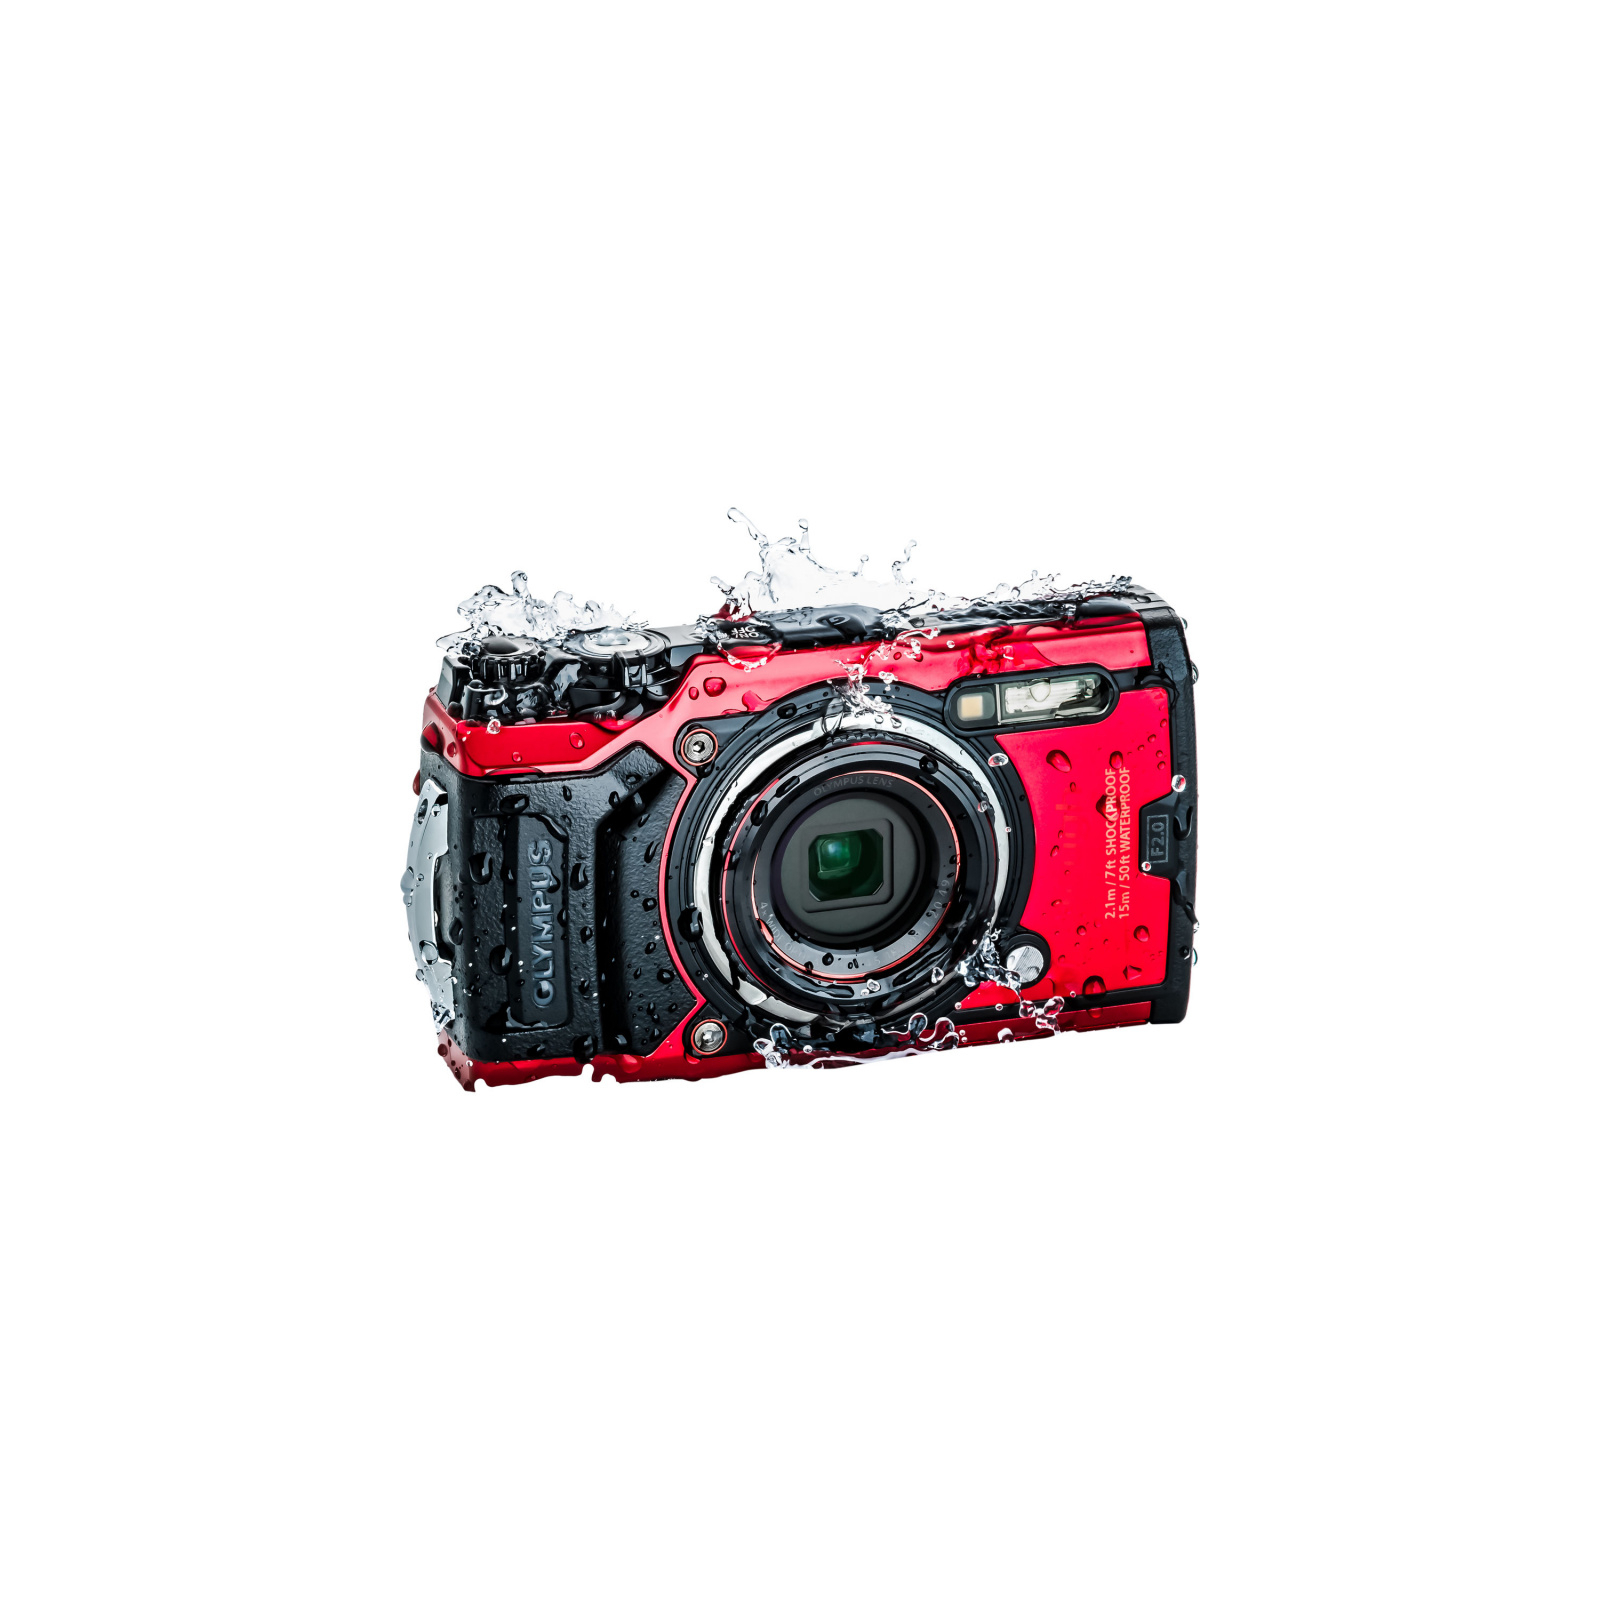 Цифровой фотоаппарат Olympus TG-6 Red (Waterproof - 15m; GPS; 4K; Wi-Fi) (V104210RE000) изображение 6